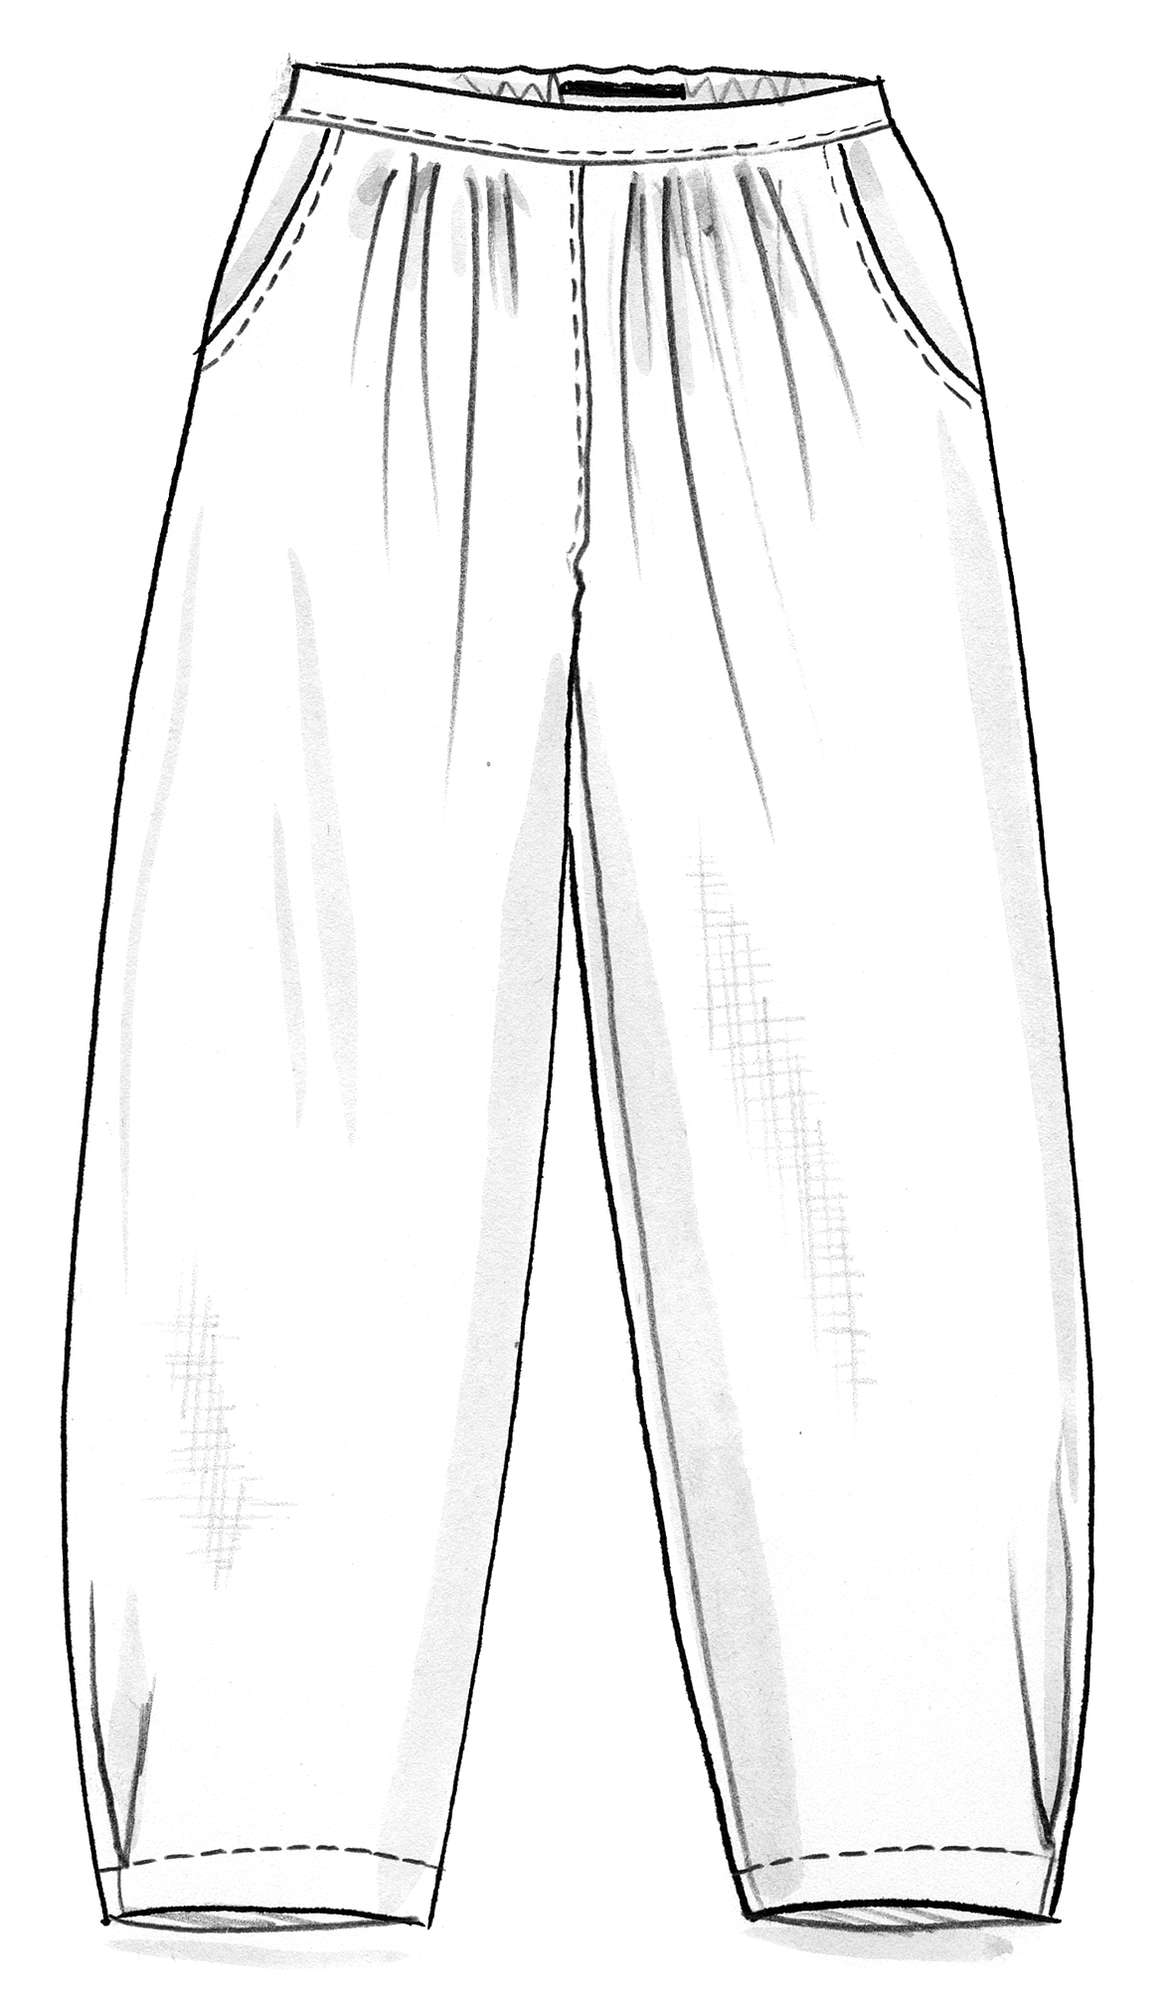 Linen trousers